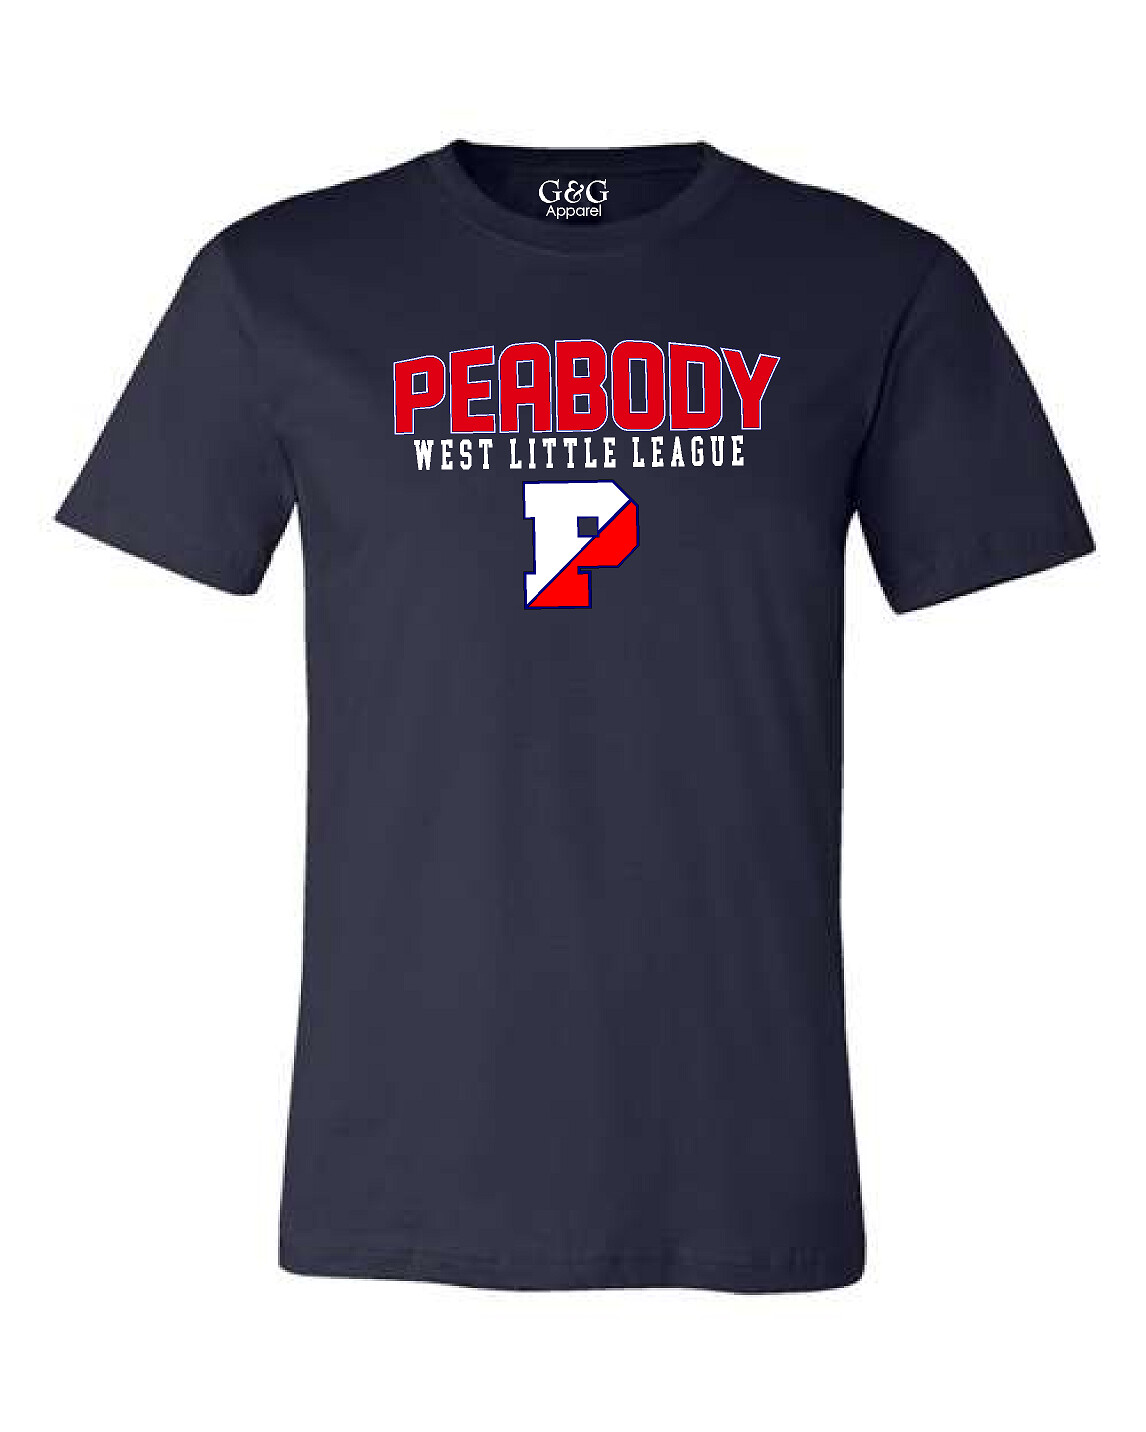 Unisex Youth & Adult 50/50 Dri-Power Peabody West Little League T-Shirt 1.0